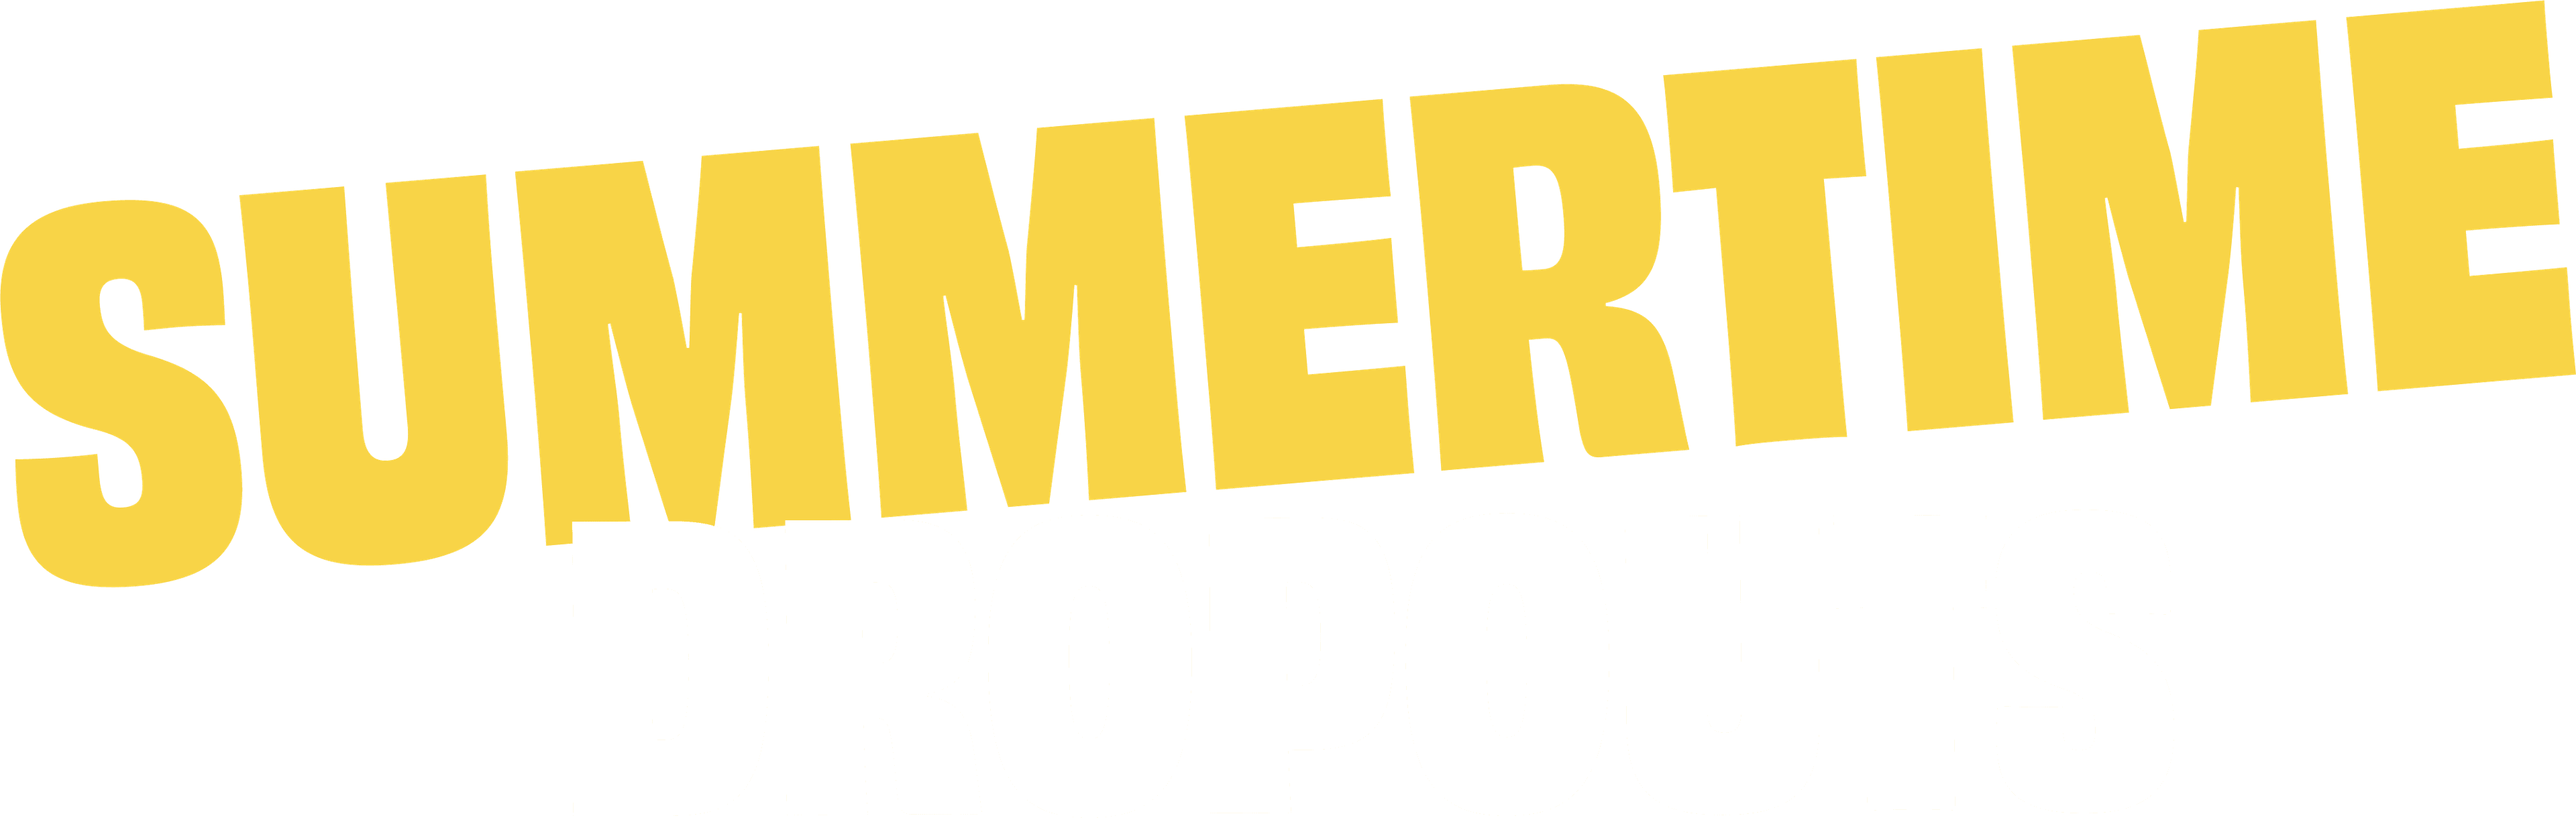 Summertime Dropouts logo